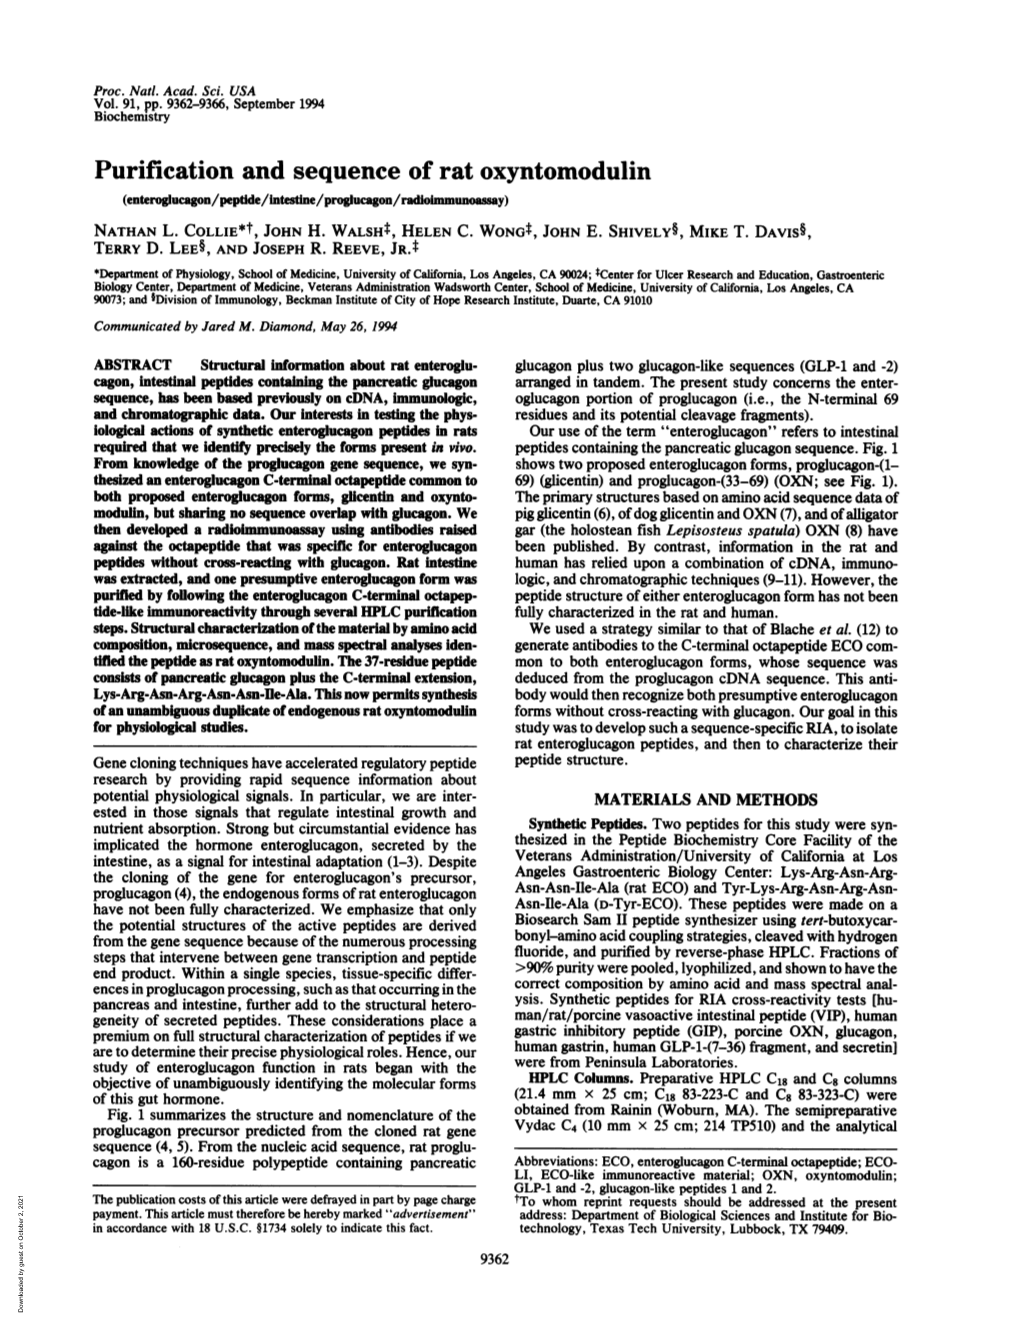 Purification and Sequence of Rat Oxyntomodulin (Enteroglucagon/Peptide/Intestine/Proglucagon/Radlolmmunoassay) NATHAN L